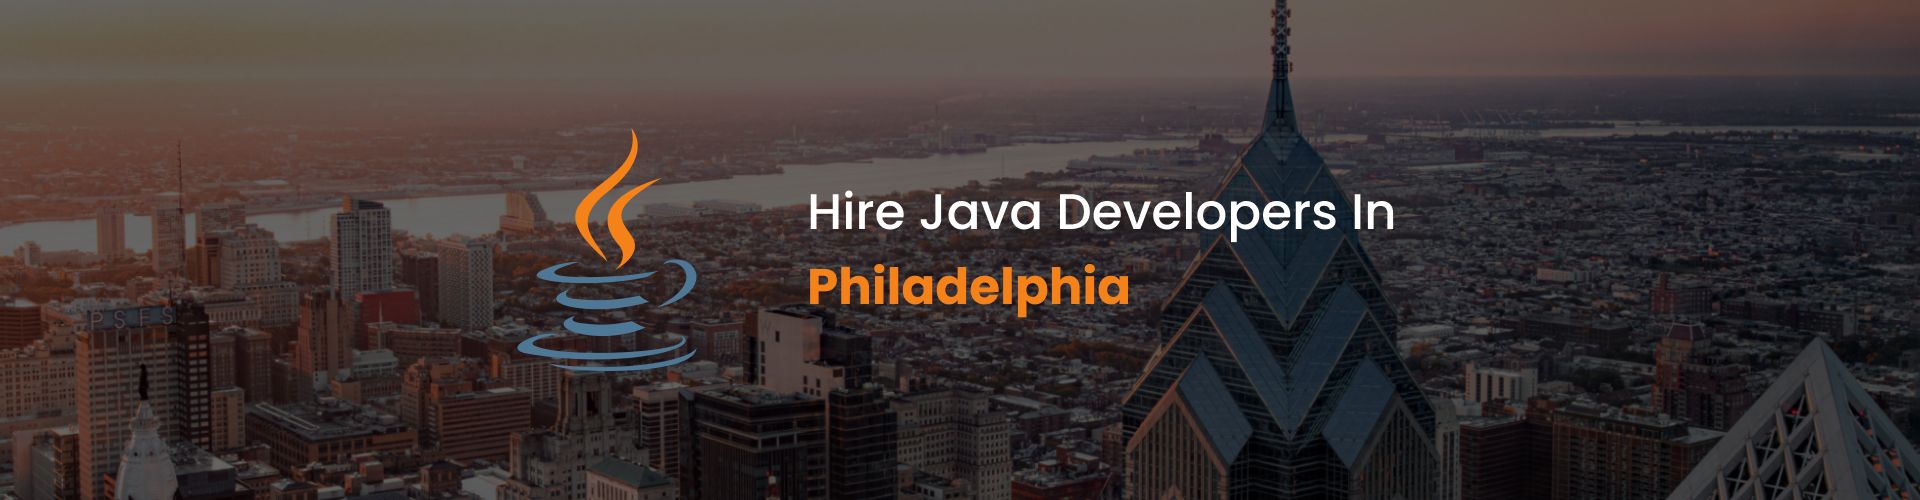 hire java developers in philadelphia